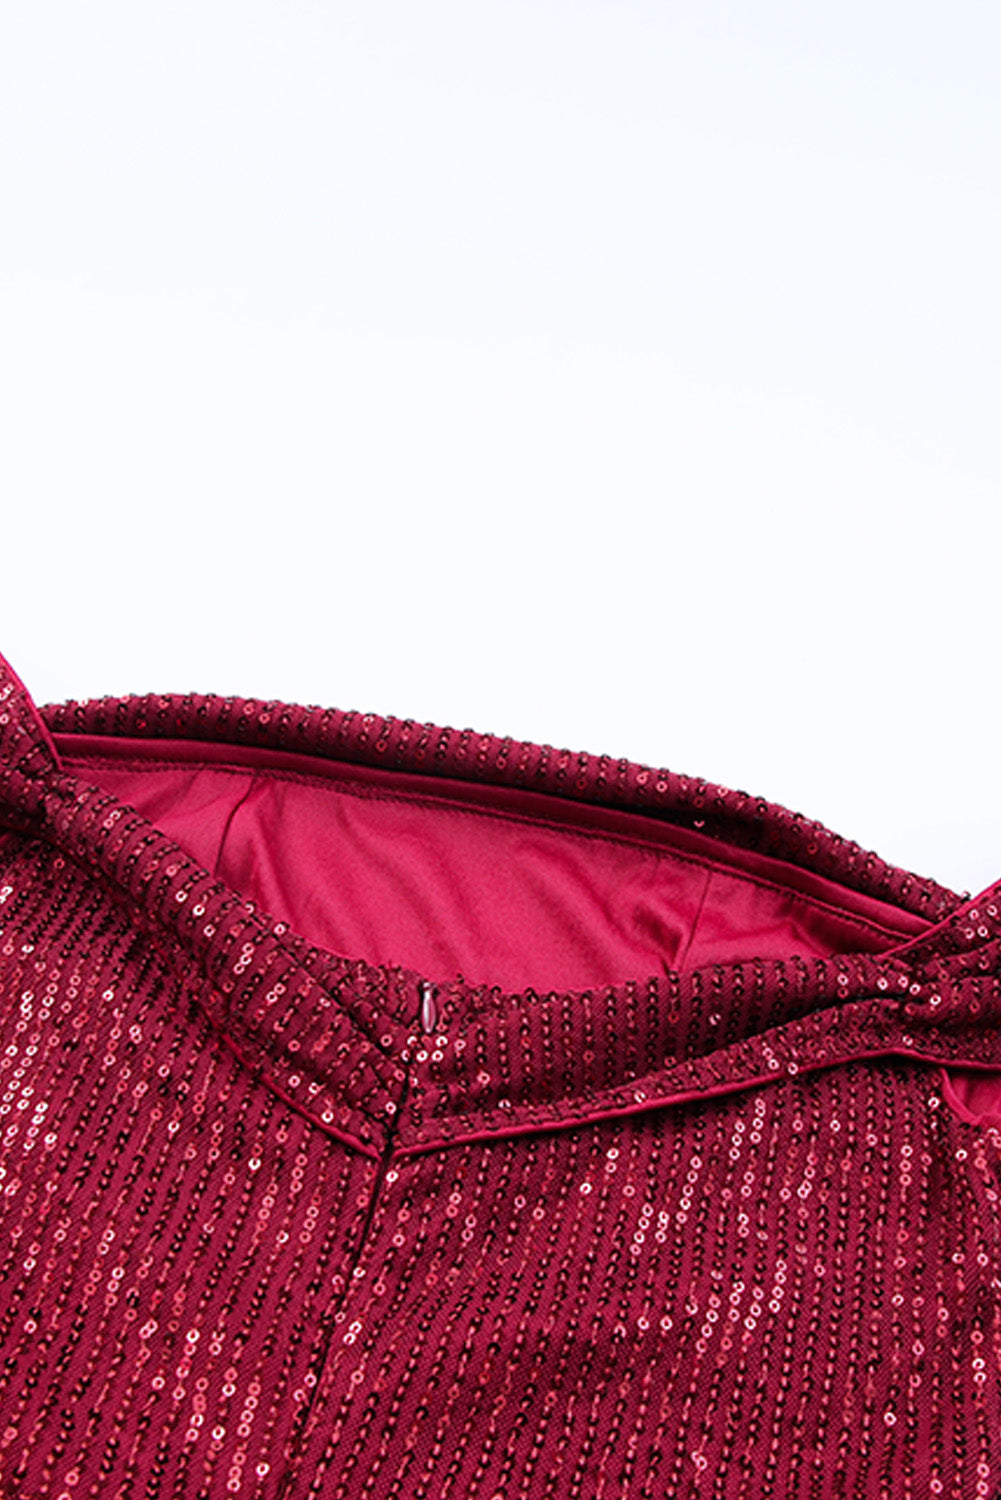 Red Off Shoulder Side Slit Bodycon Sequin Dress - EBEPEX